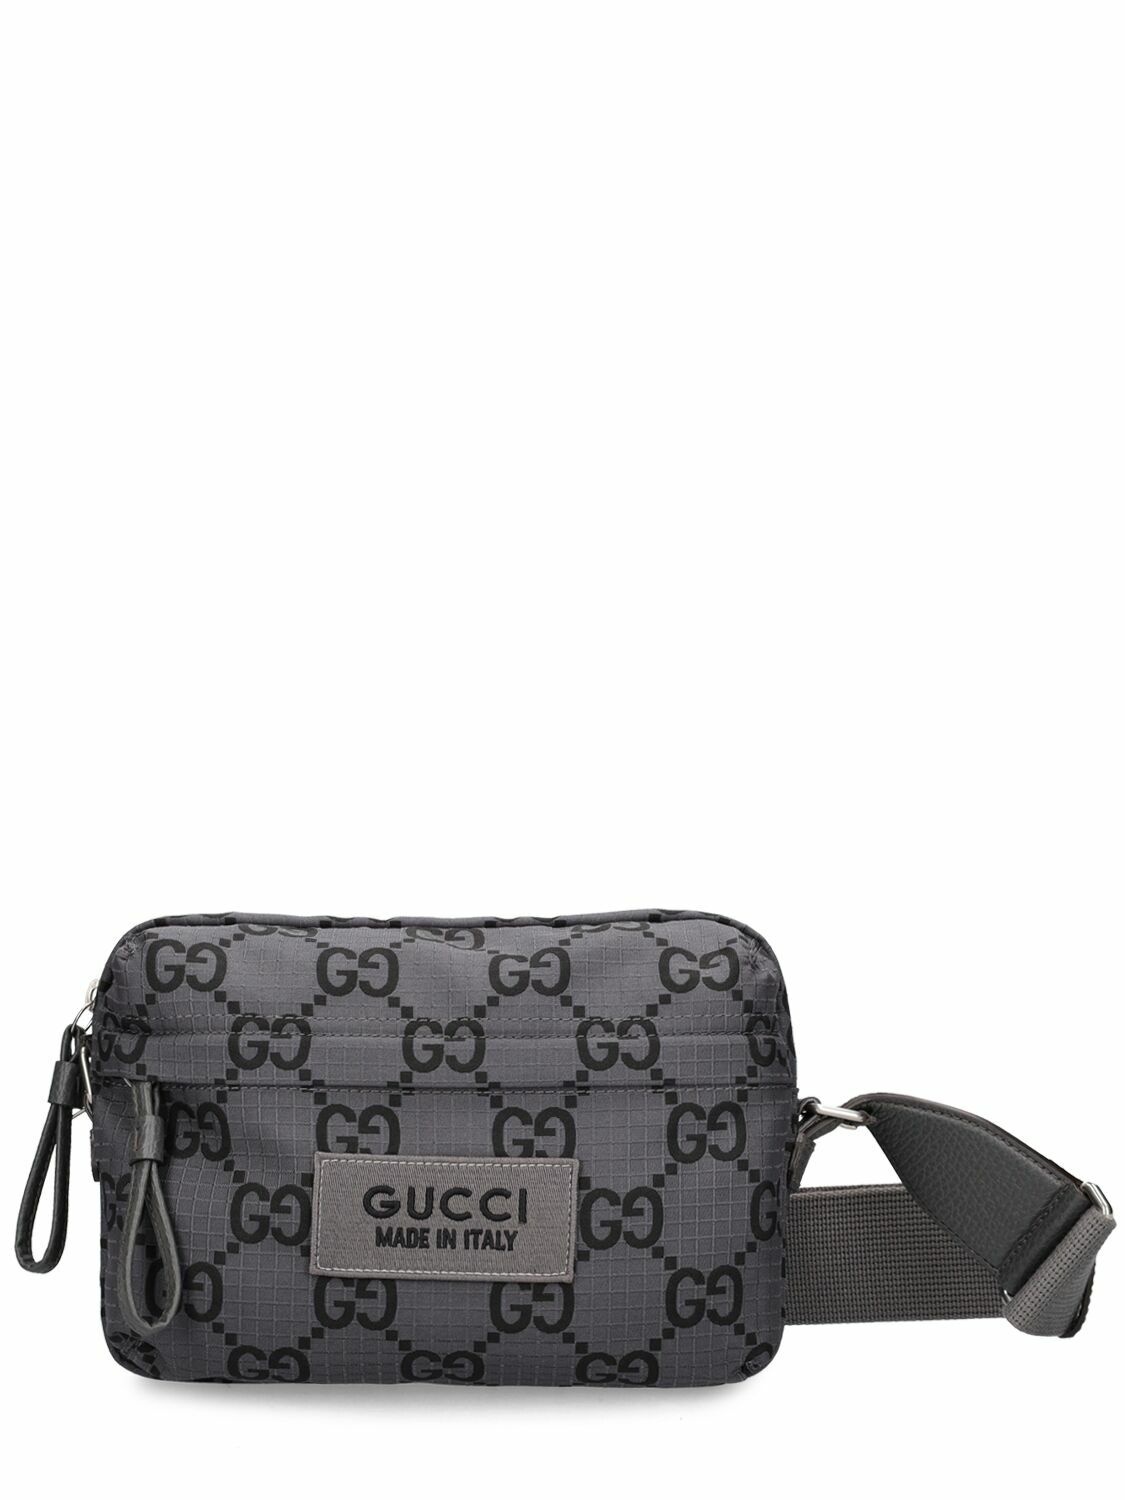 Photo: GUCCI - Gg Ripstop Nylon Crossbody Bag